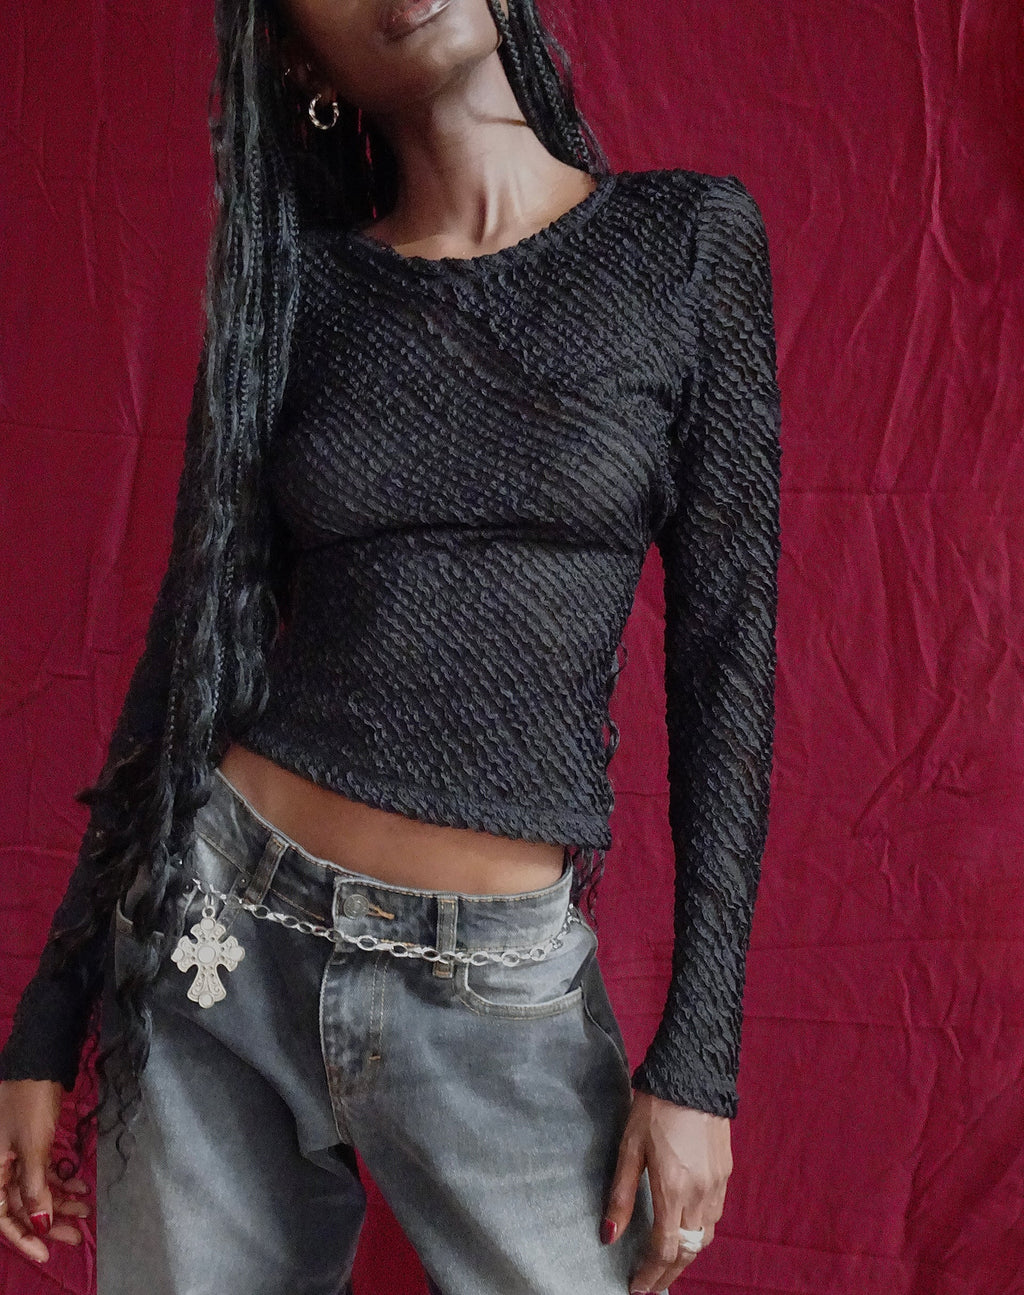 Maya Long Sleeve Top in Textured Black (Top à manches longues en noir texturé)